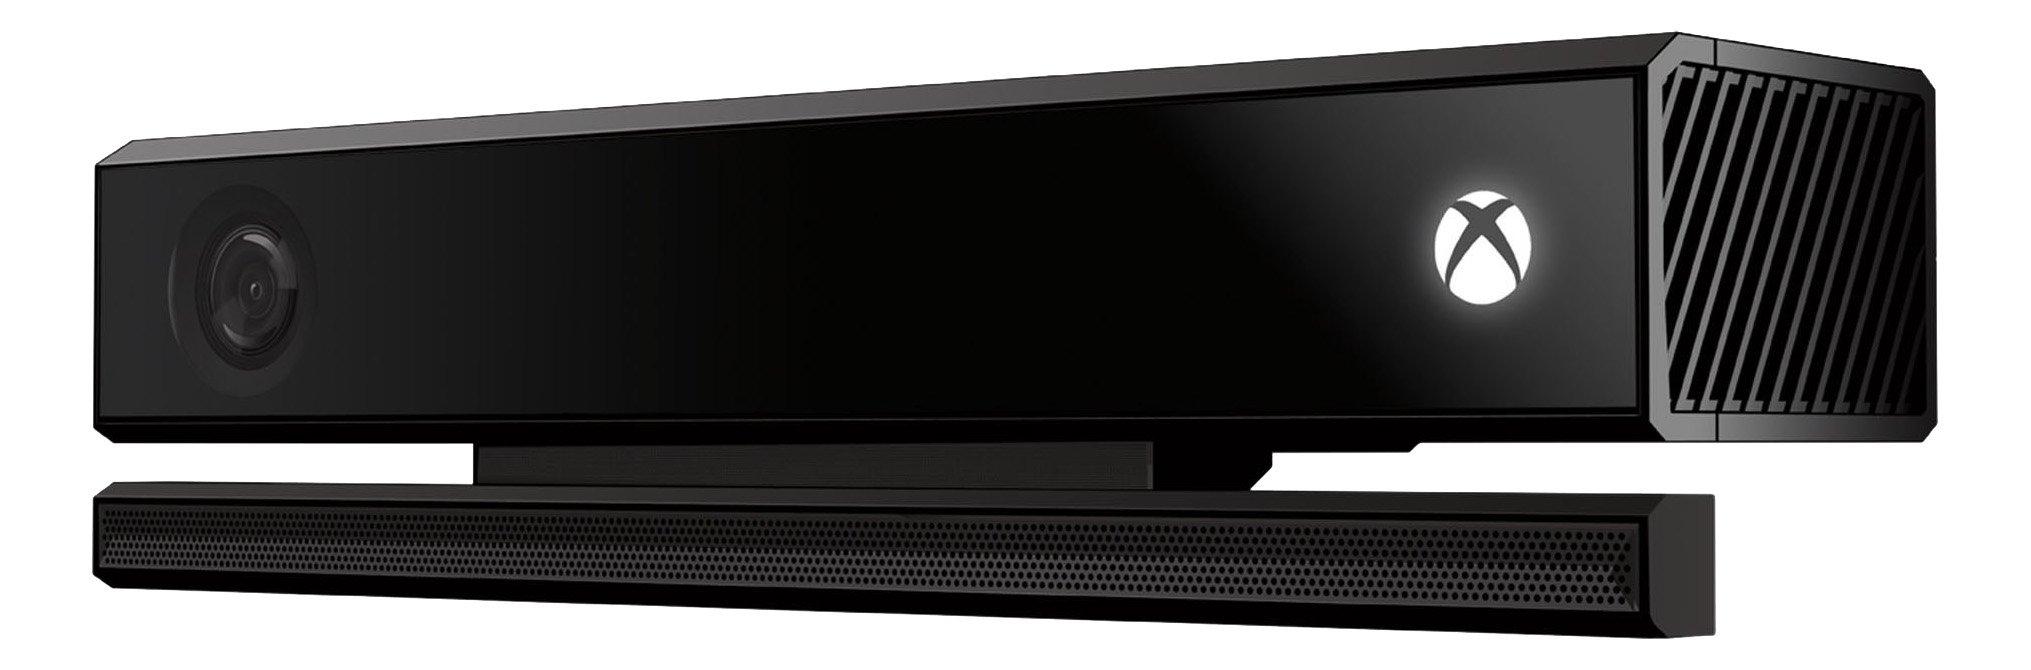 Xbox One + Kinect (Day One エディション) (6RZ-00030) 【メーカー生産終了】 d2ldlup